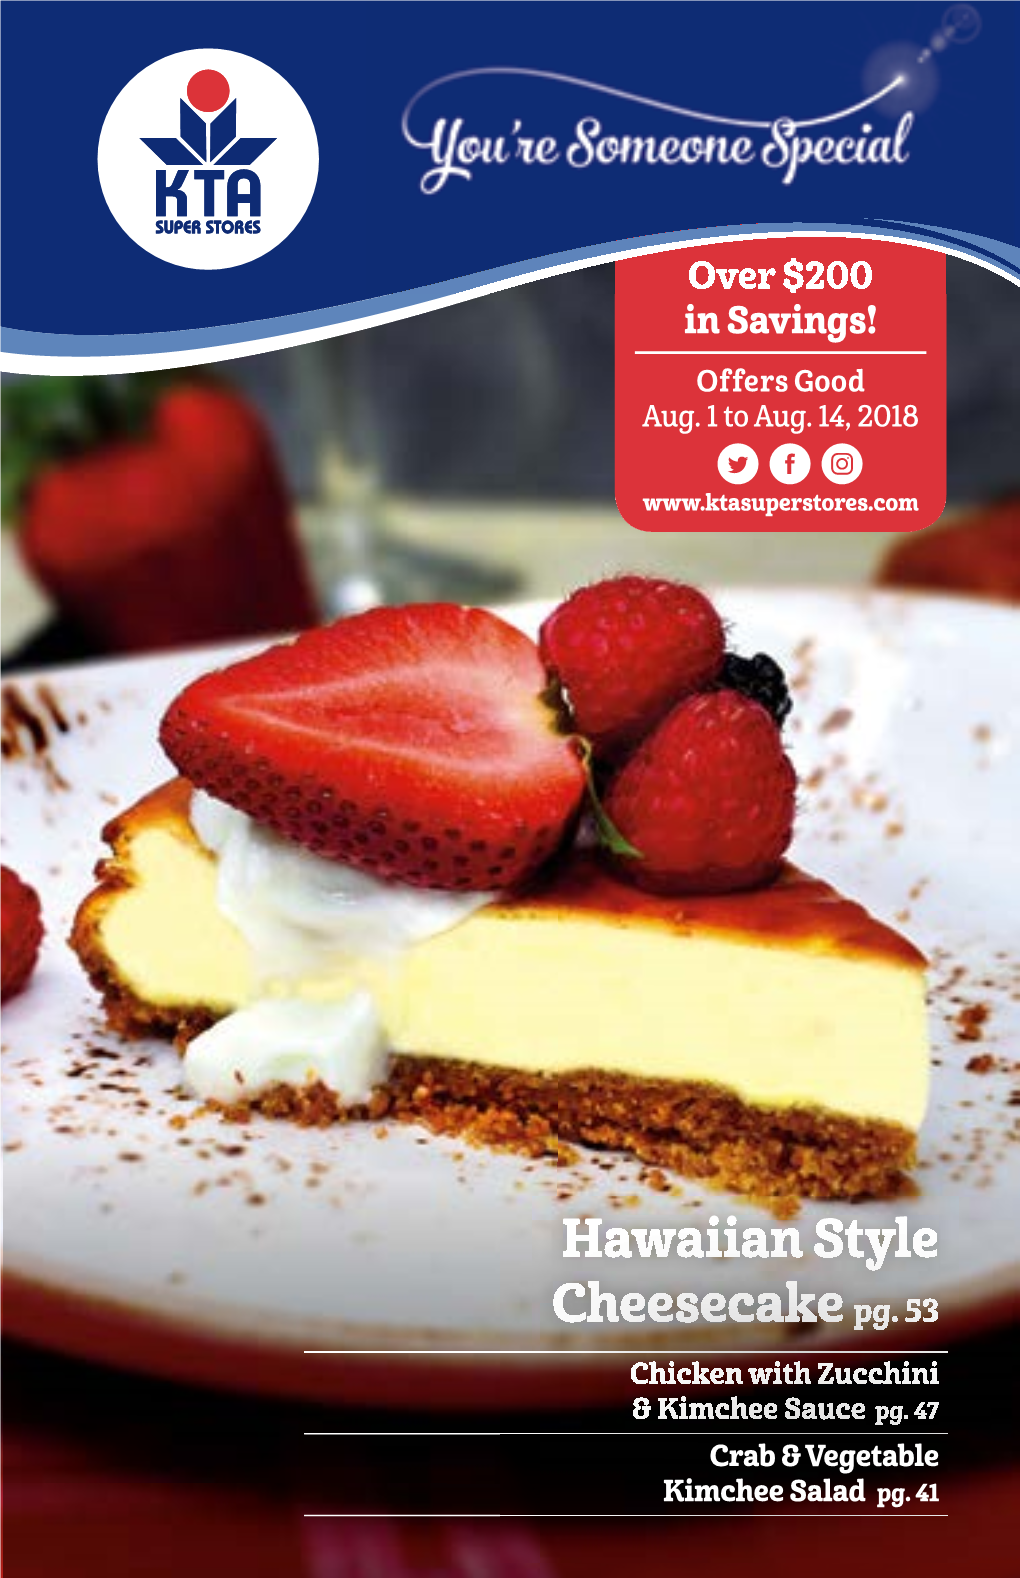 Hawaiian Style Cheesecakepg. 53